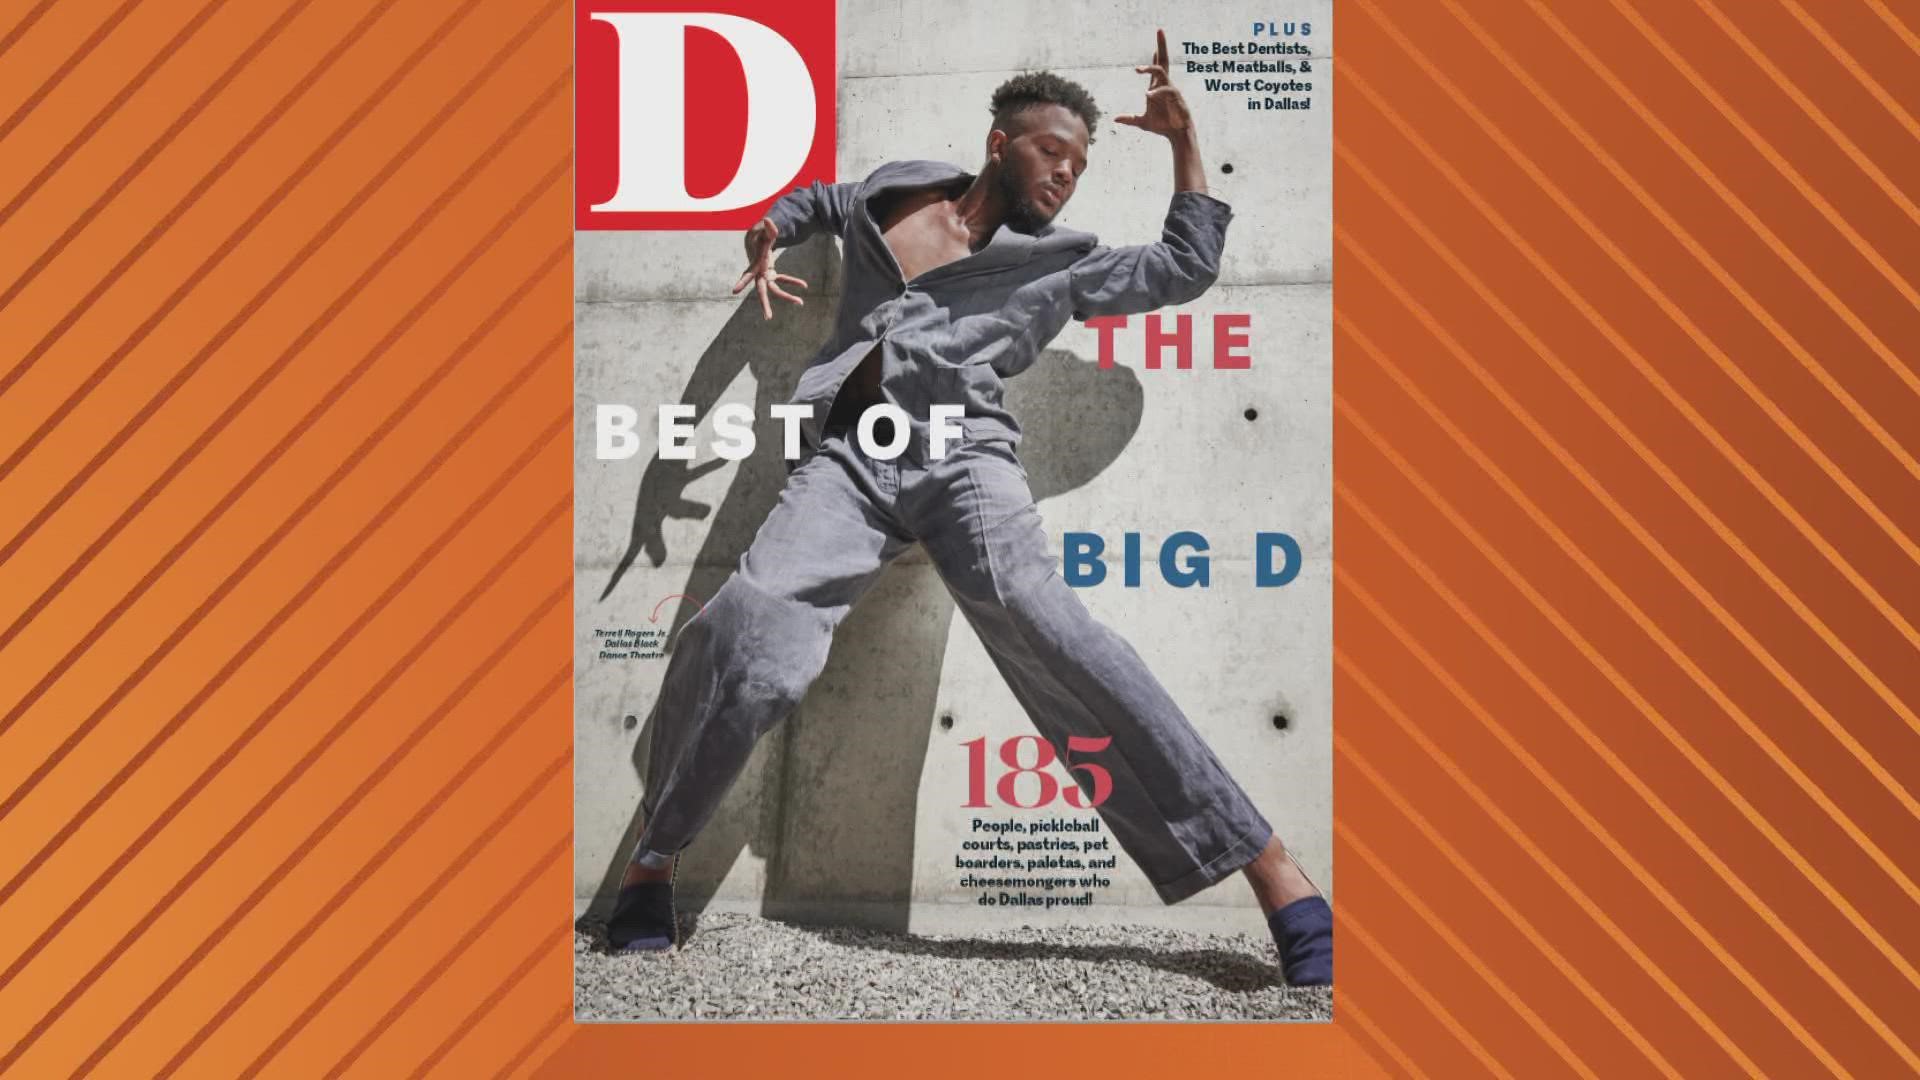 We're exploring The Best of Big D.